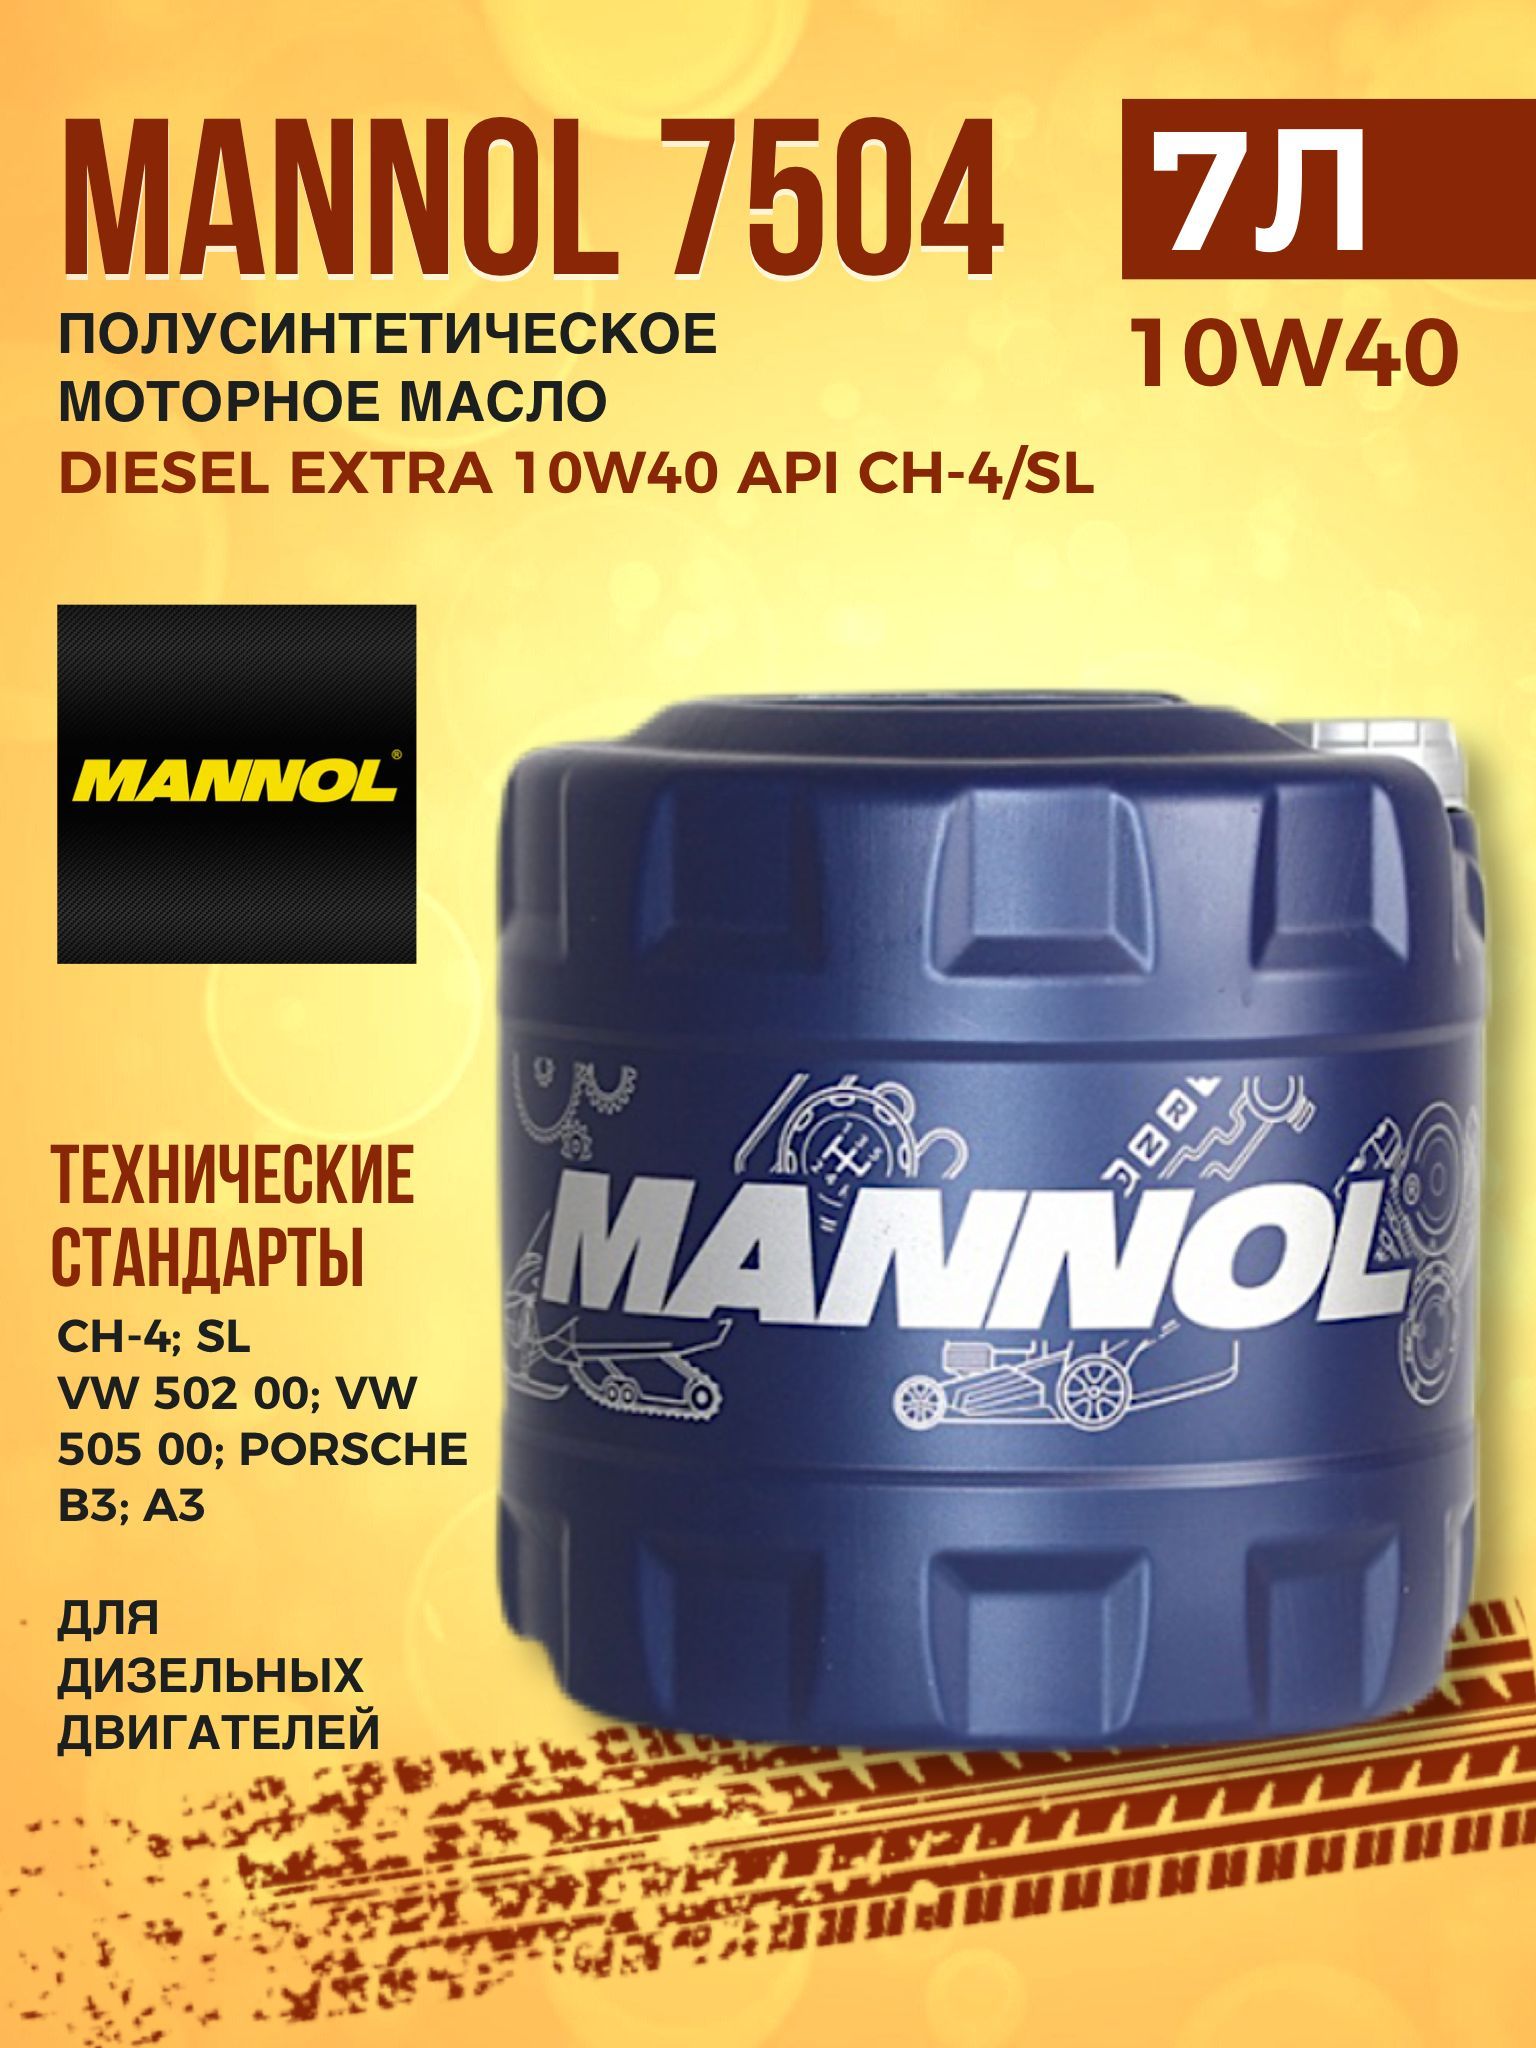 Масло манол 10w 40 отзывы. Mannol Diesel Extra 10w-40. 10w40 Ch-4/SL Mannol Diesel Extra допуска. Mannol 7504 масло мот. П/синт. Diesel Extra 10w40 API Ch-4/SL ACEA b4/a3 7л. Mannol Classic 7501 10w-40 характеристики.